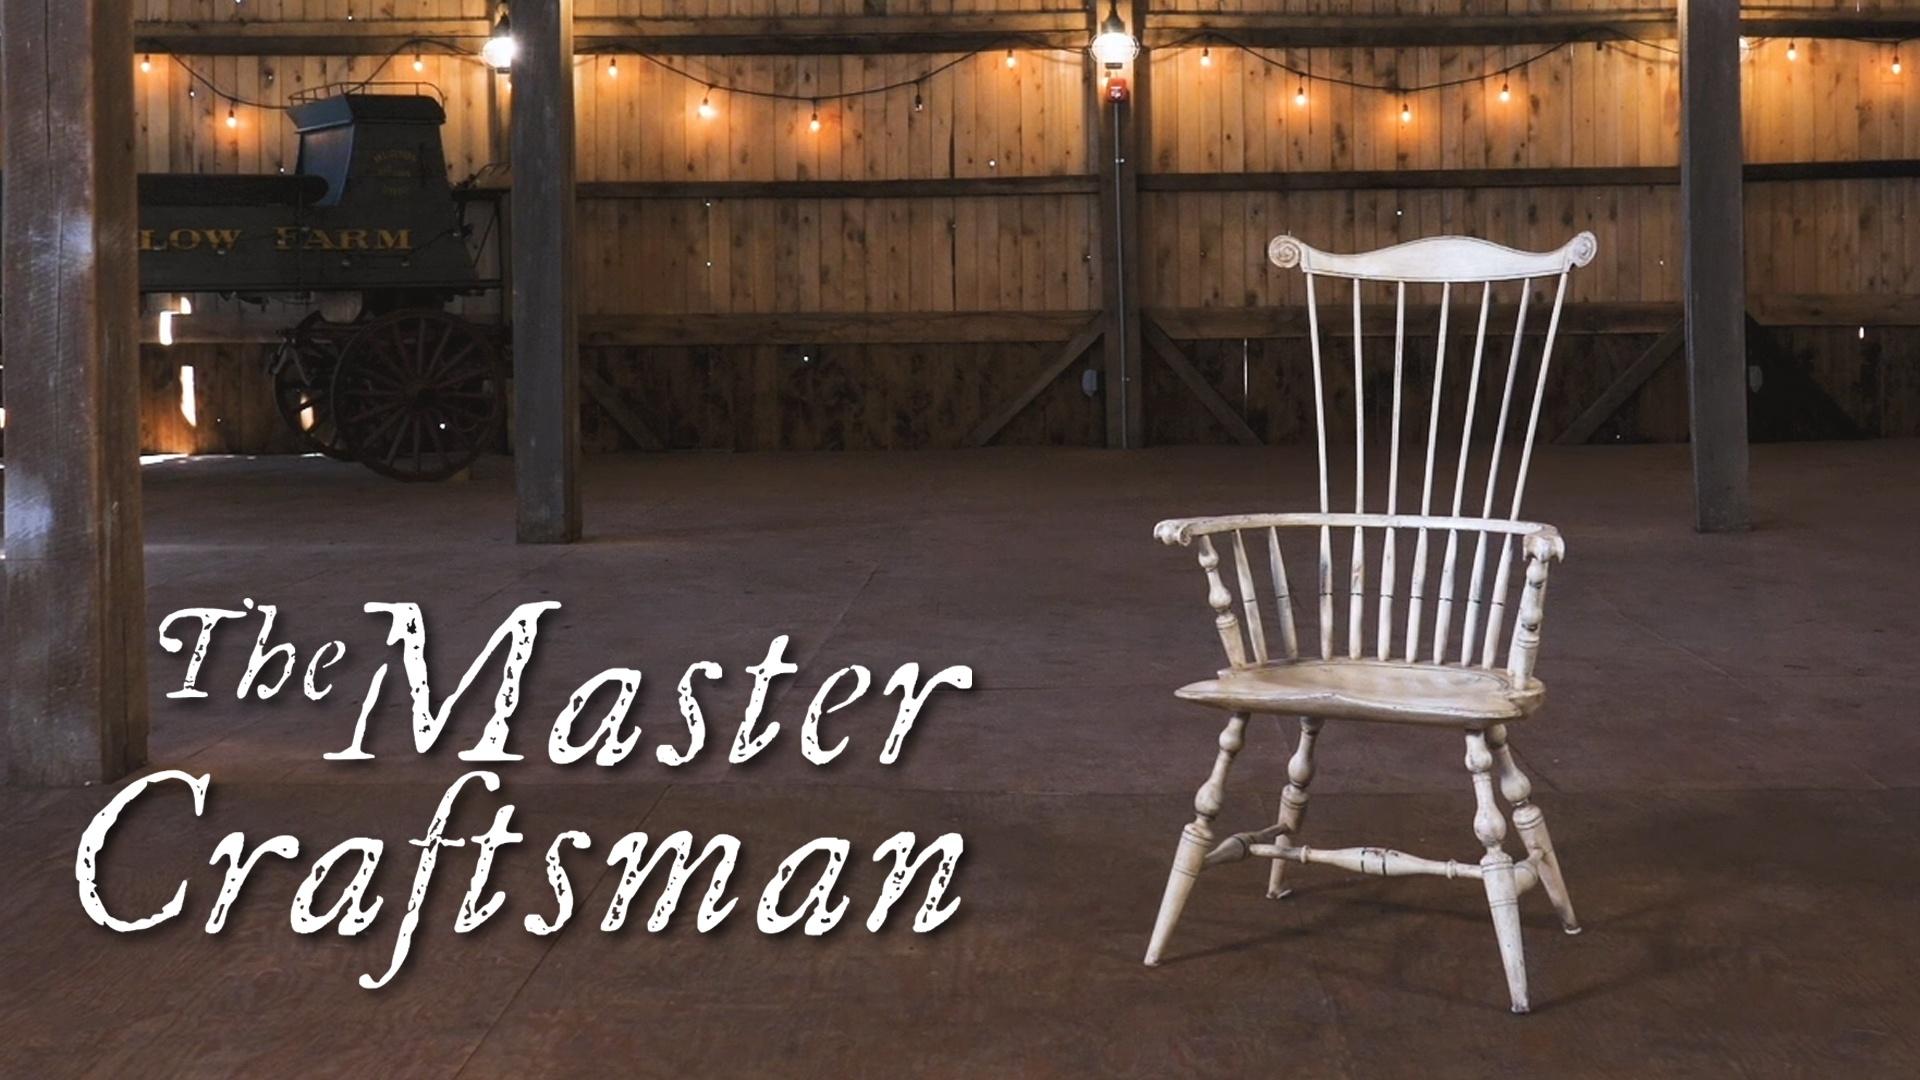 The Master Craftsman